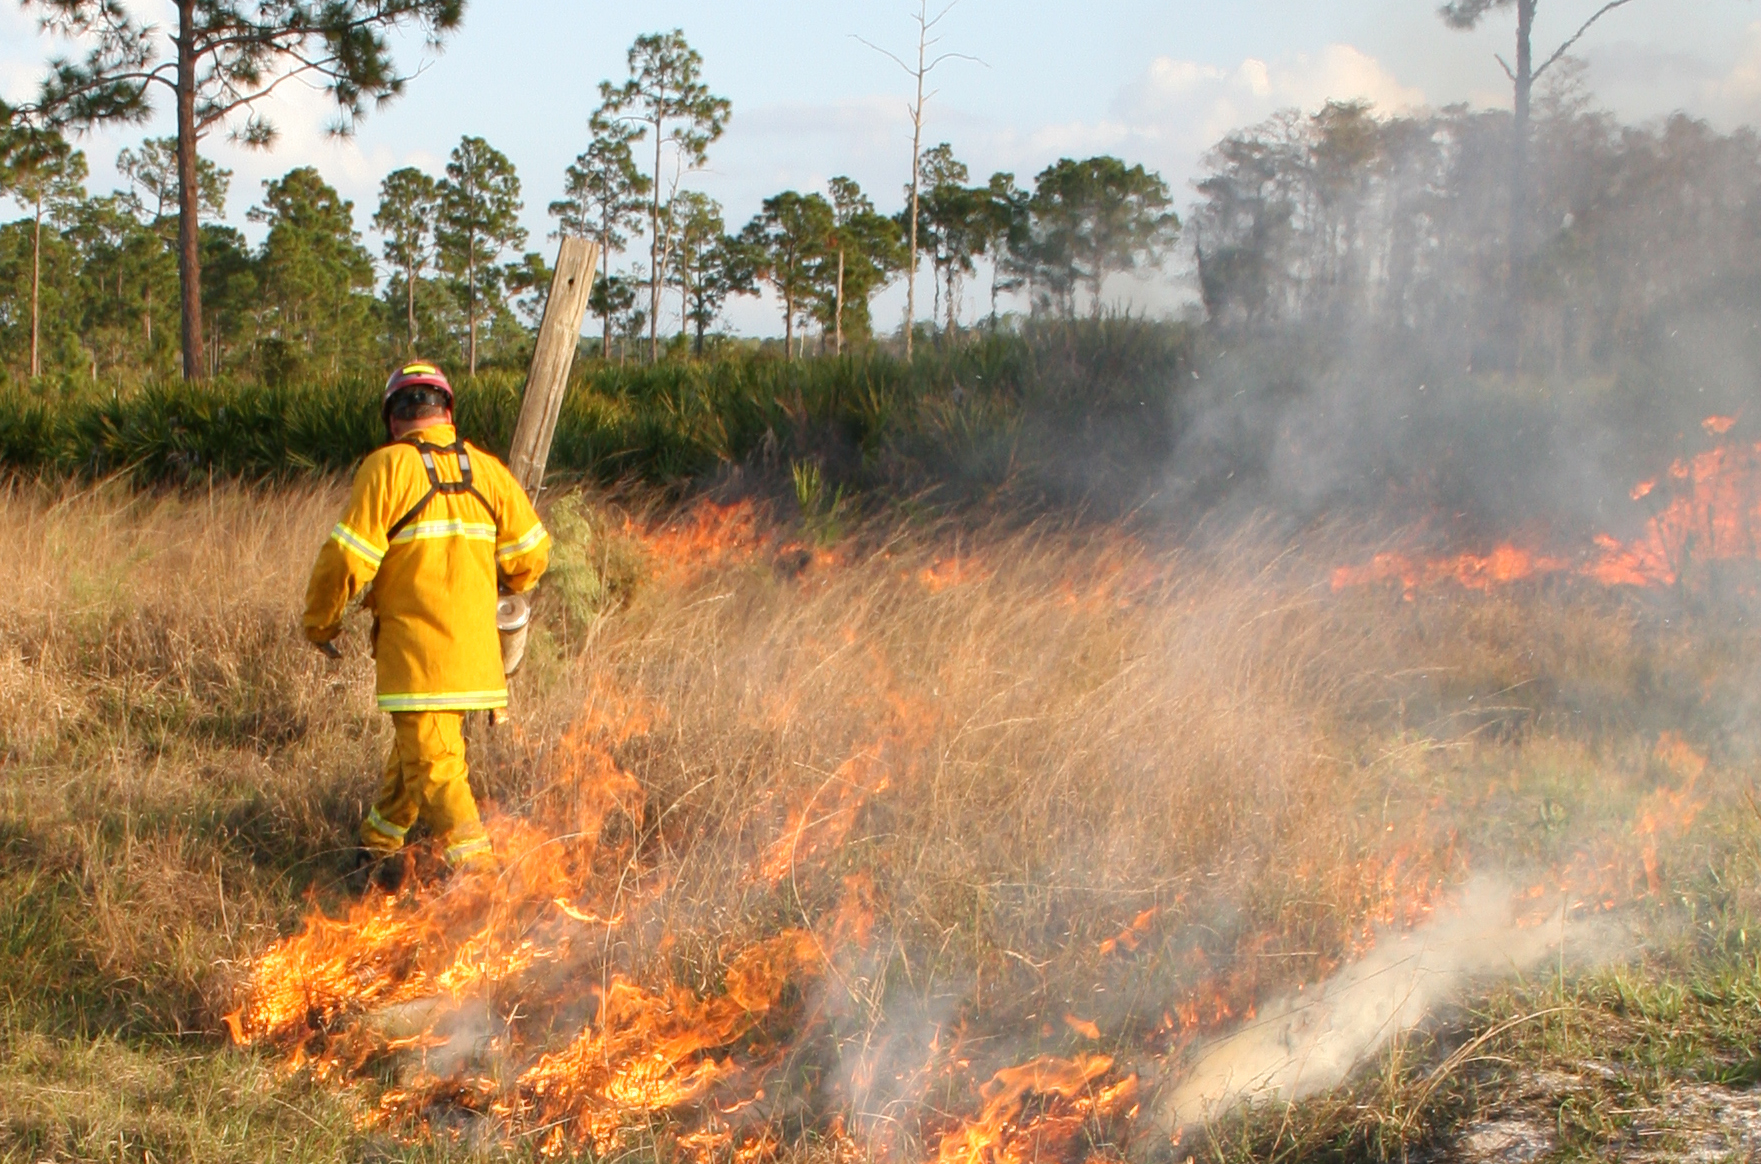 Conducting a prescribed burn at Audubon's Corkscrew Swamp Sanctuary